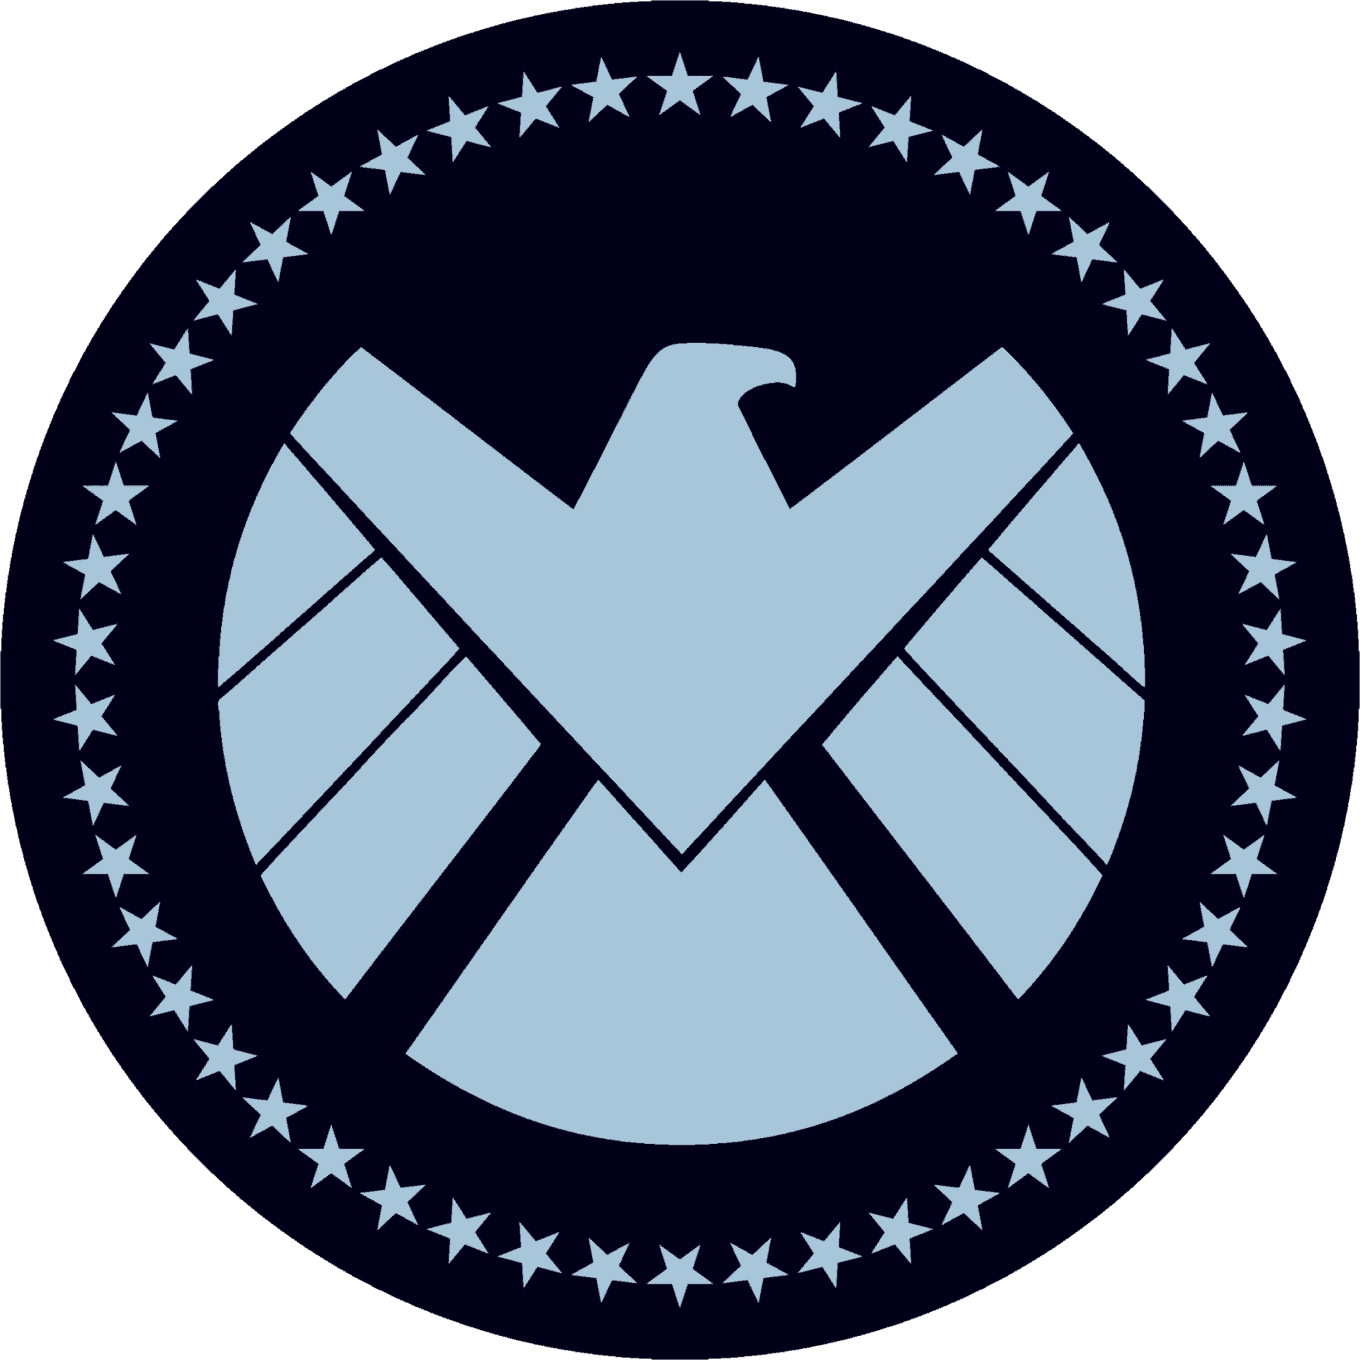 Agents-of-SHIELD-logo-symbol-2.png